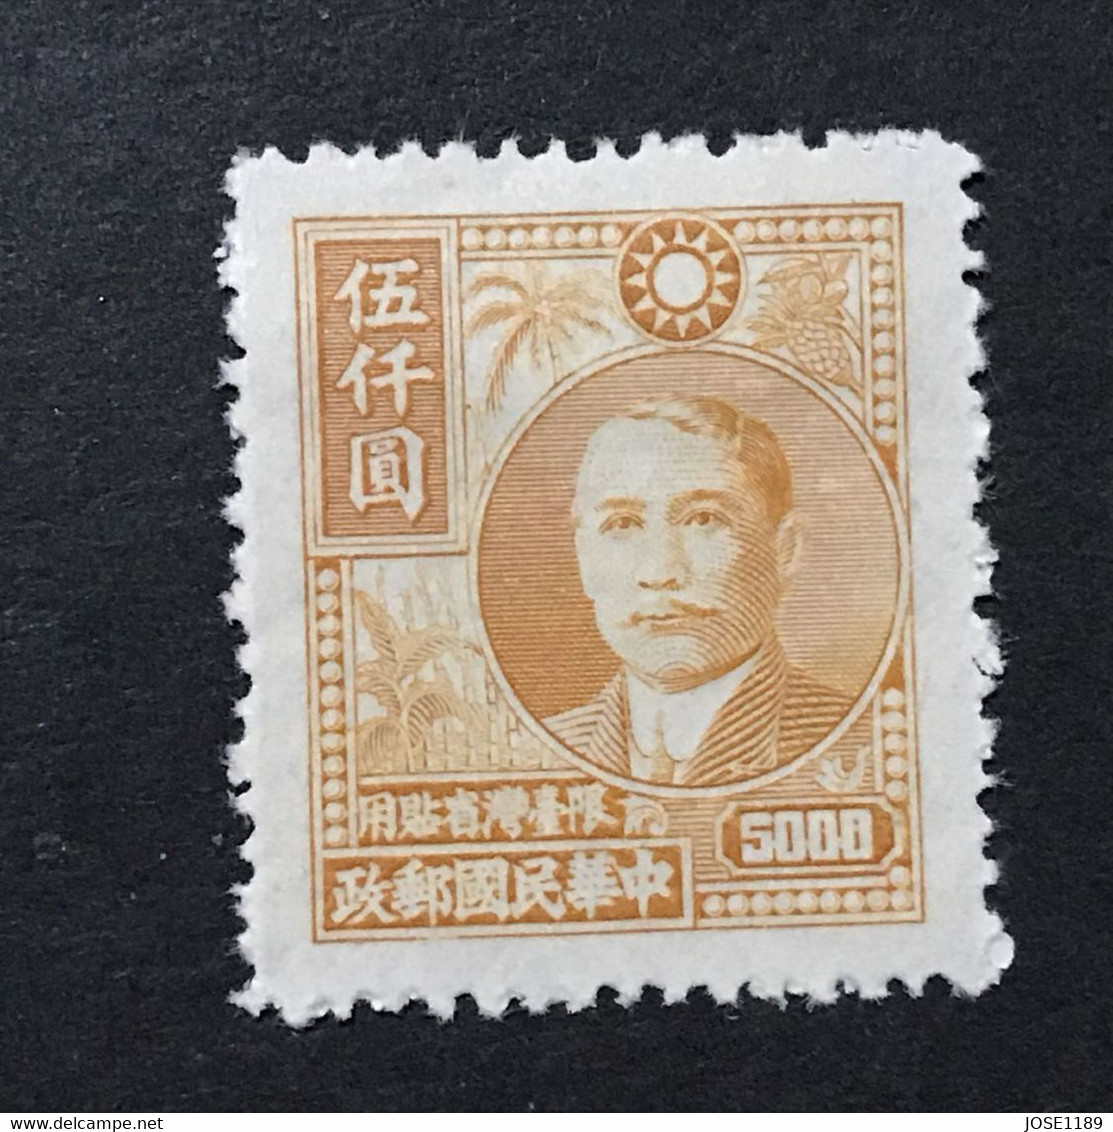 ◆◆◆Taiwán (Formosa)  1949  Dr. Sun Yat-sen And Farm Products , 2nd Issue , Sc #64 ,  $5000   NEW   AB3514 - Ungebraucht